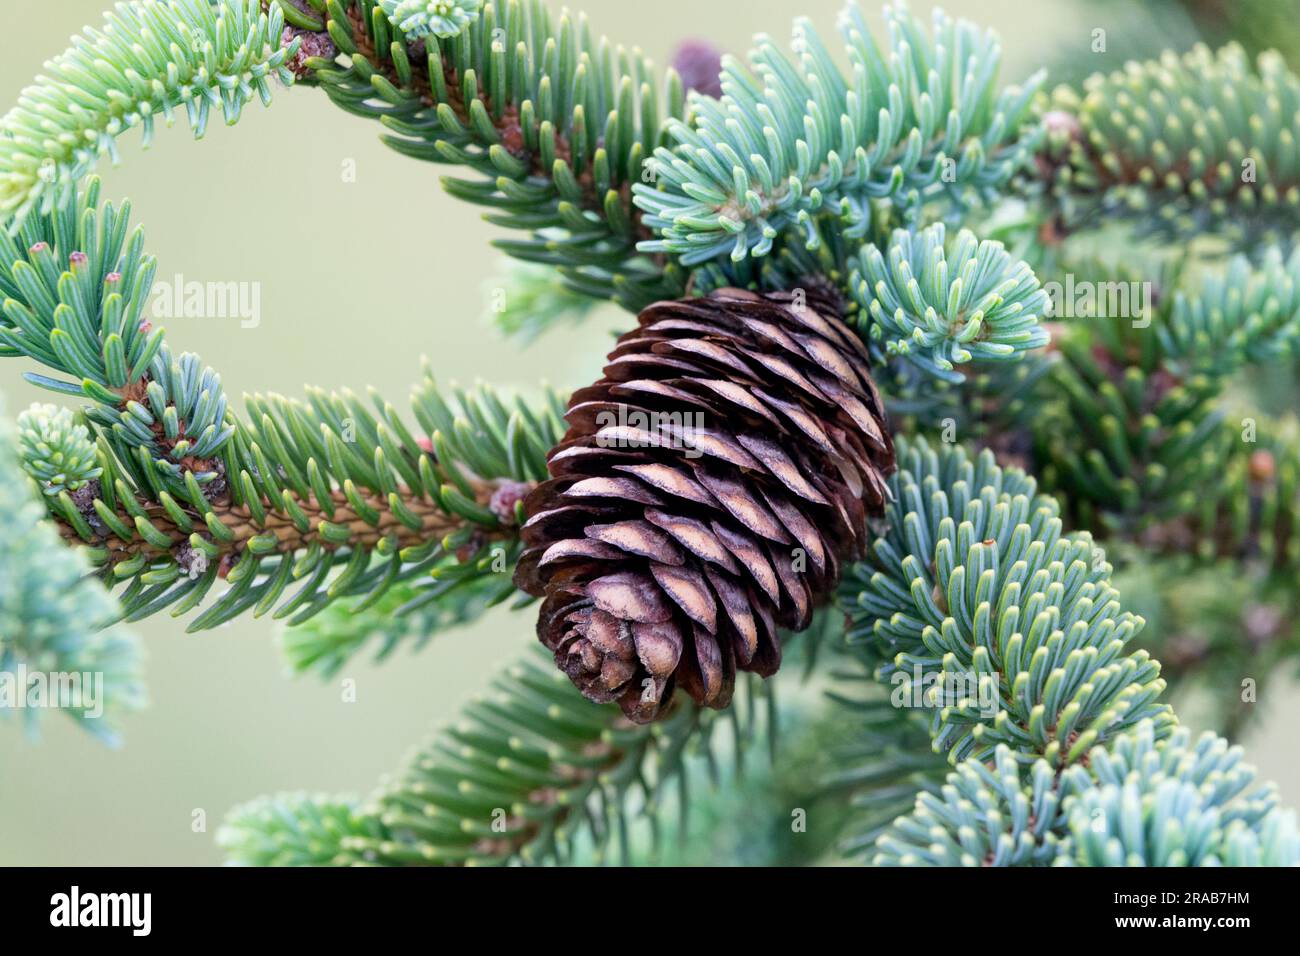 Koniferenzapfen, Spruce koyamai, Nahaufnahme, Zweig, Needles Picea koyamai Stockfoto